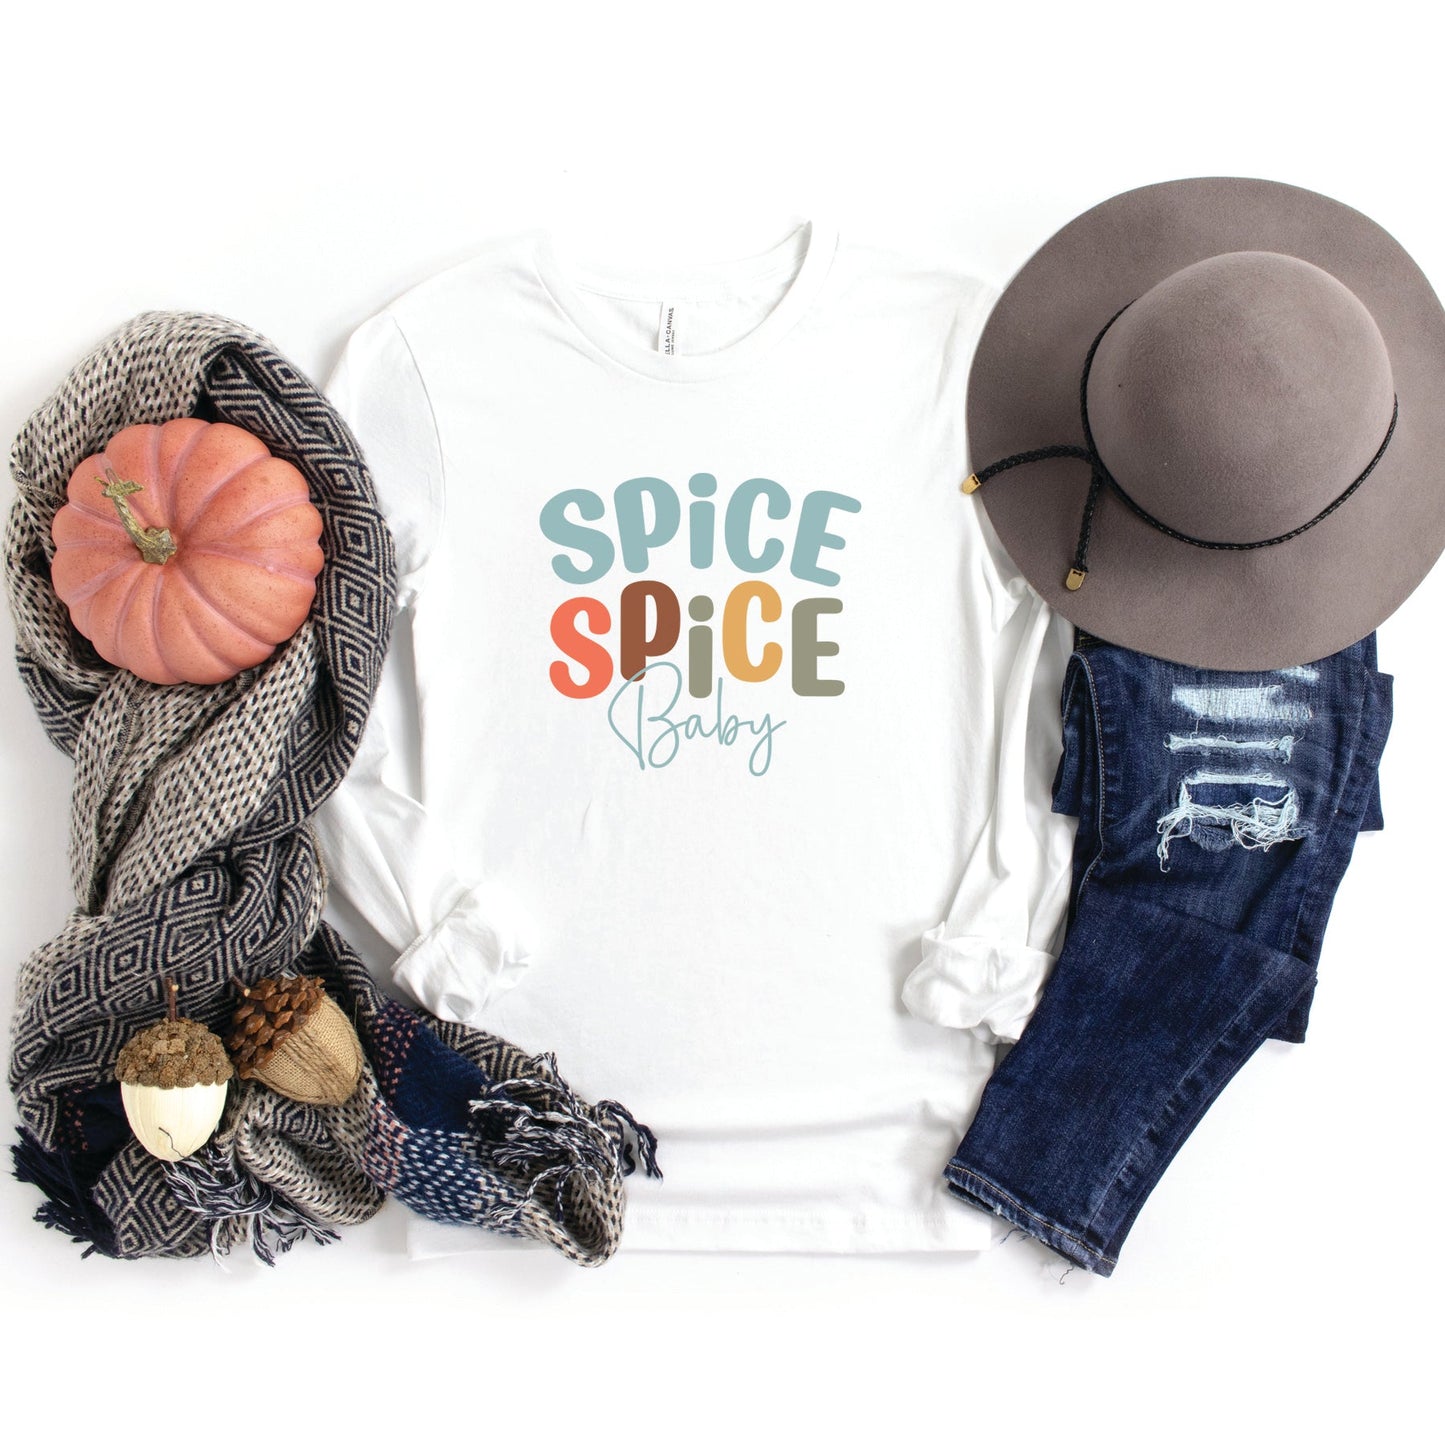 Spice Spice Baby Cursive | Long Sleeve Crew Neck